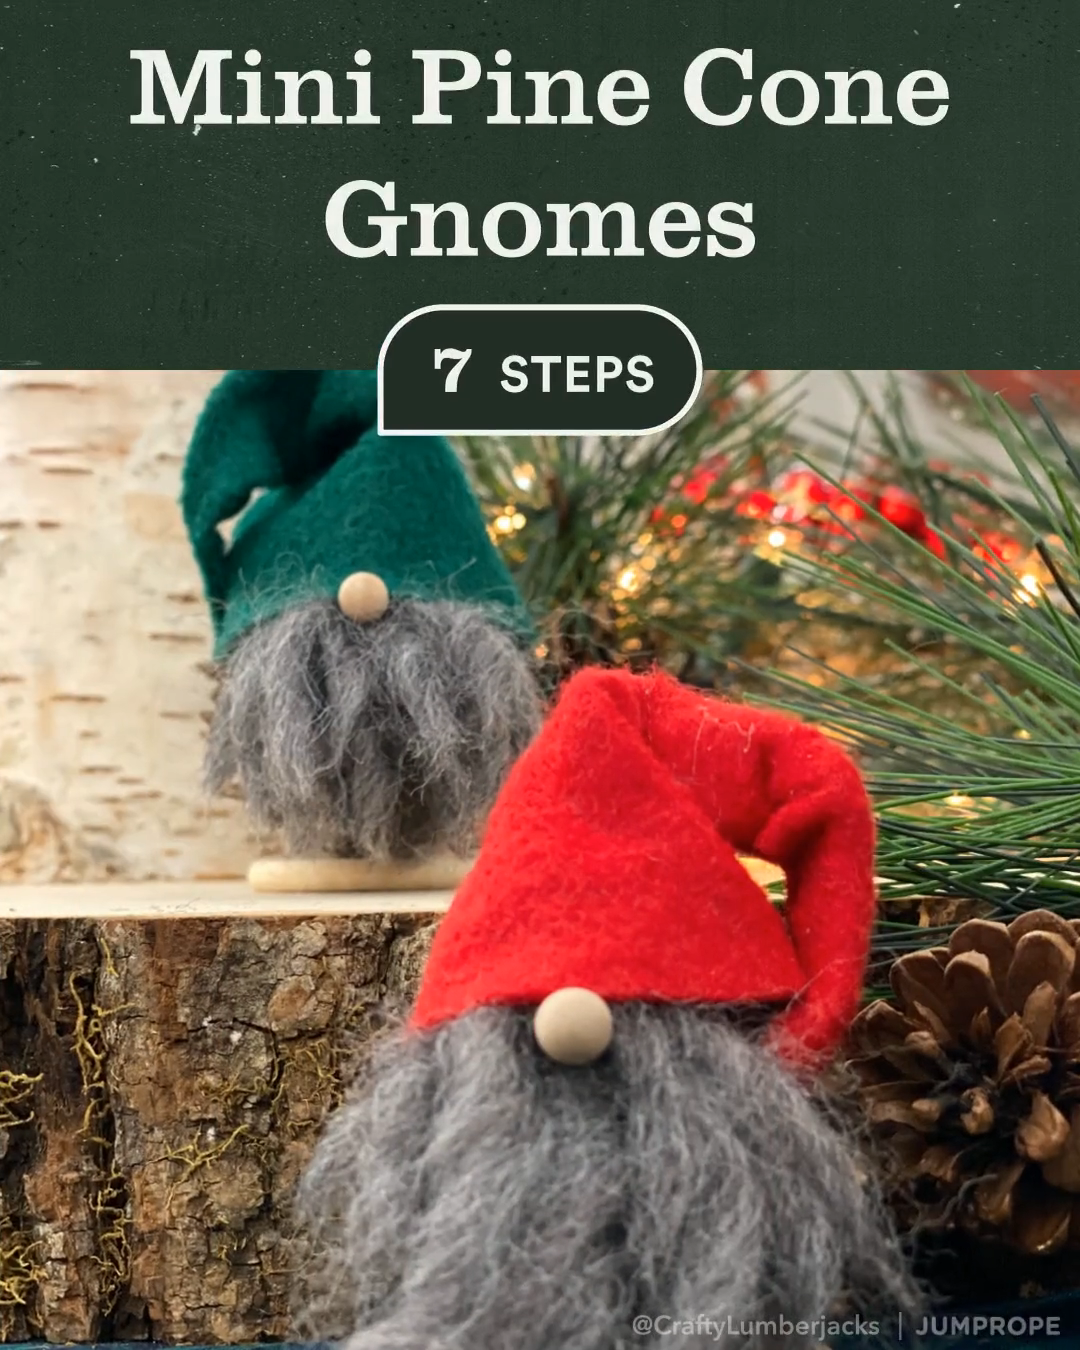 Mini Pine Cone Gnomes For Christmas - Mini Pine Cone Gnomes For Christmas -   18 diy For Teens gifts ideas